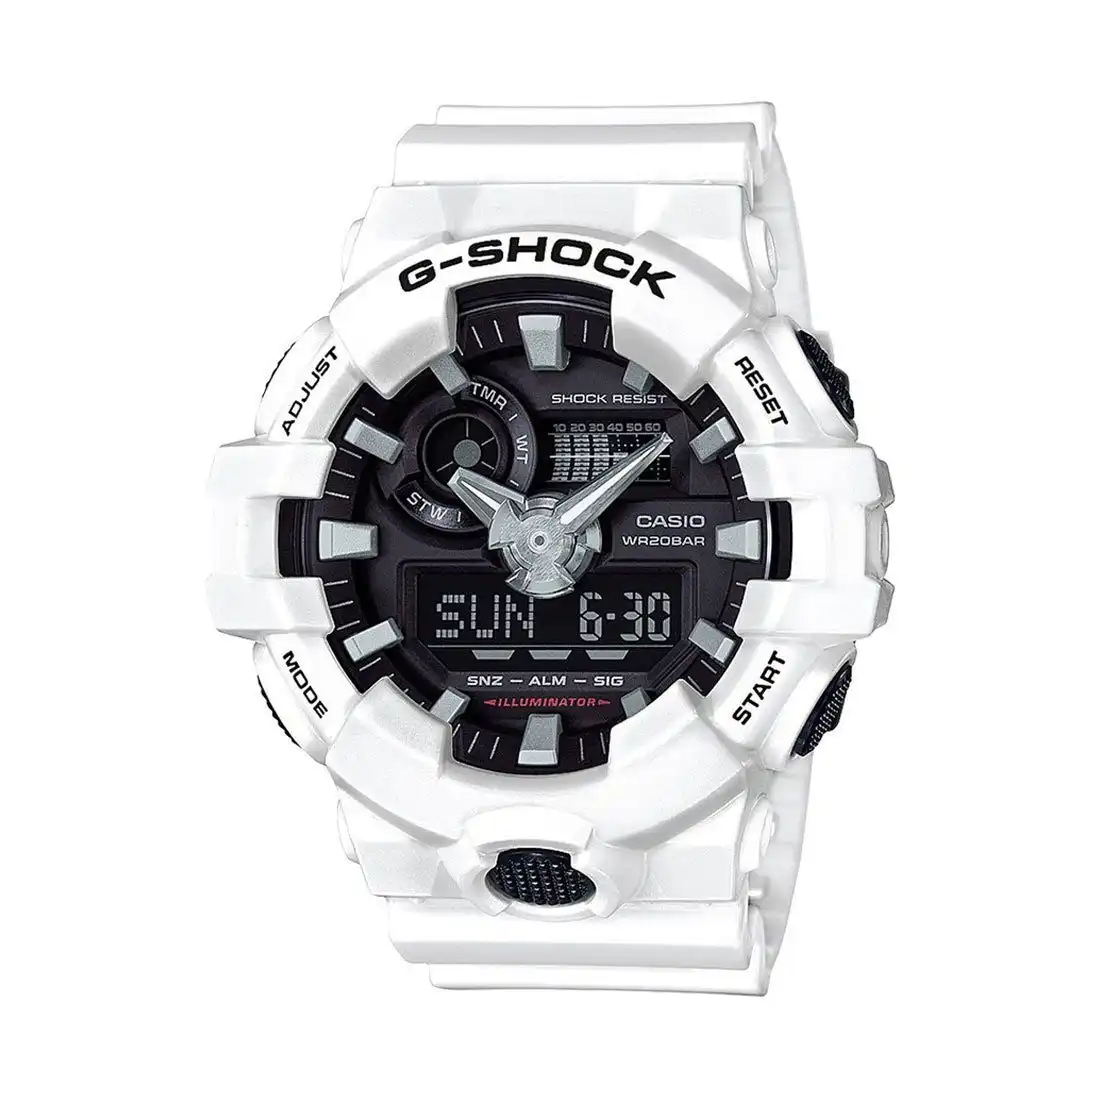 Casion G-Shock GA700 Series White Digital & Analog Watch GA-700-7ADR